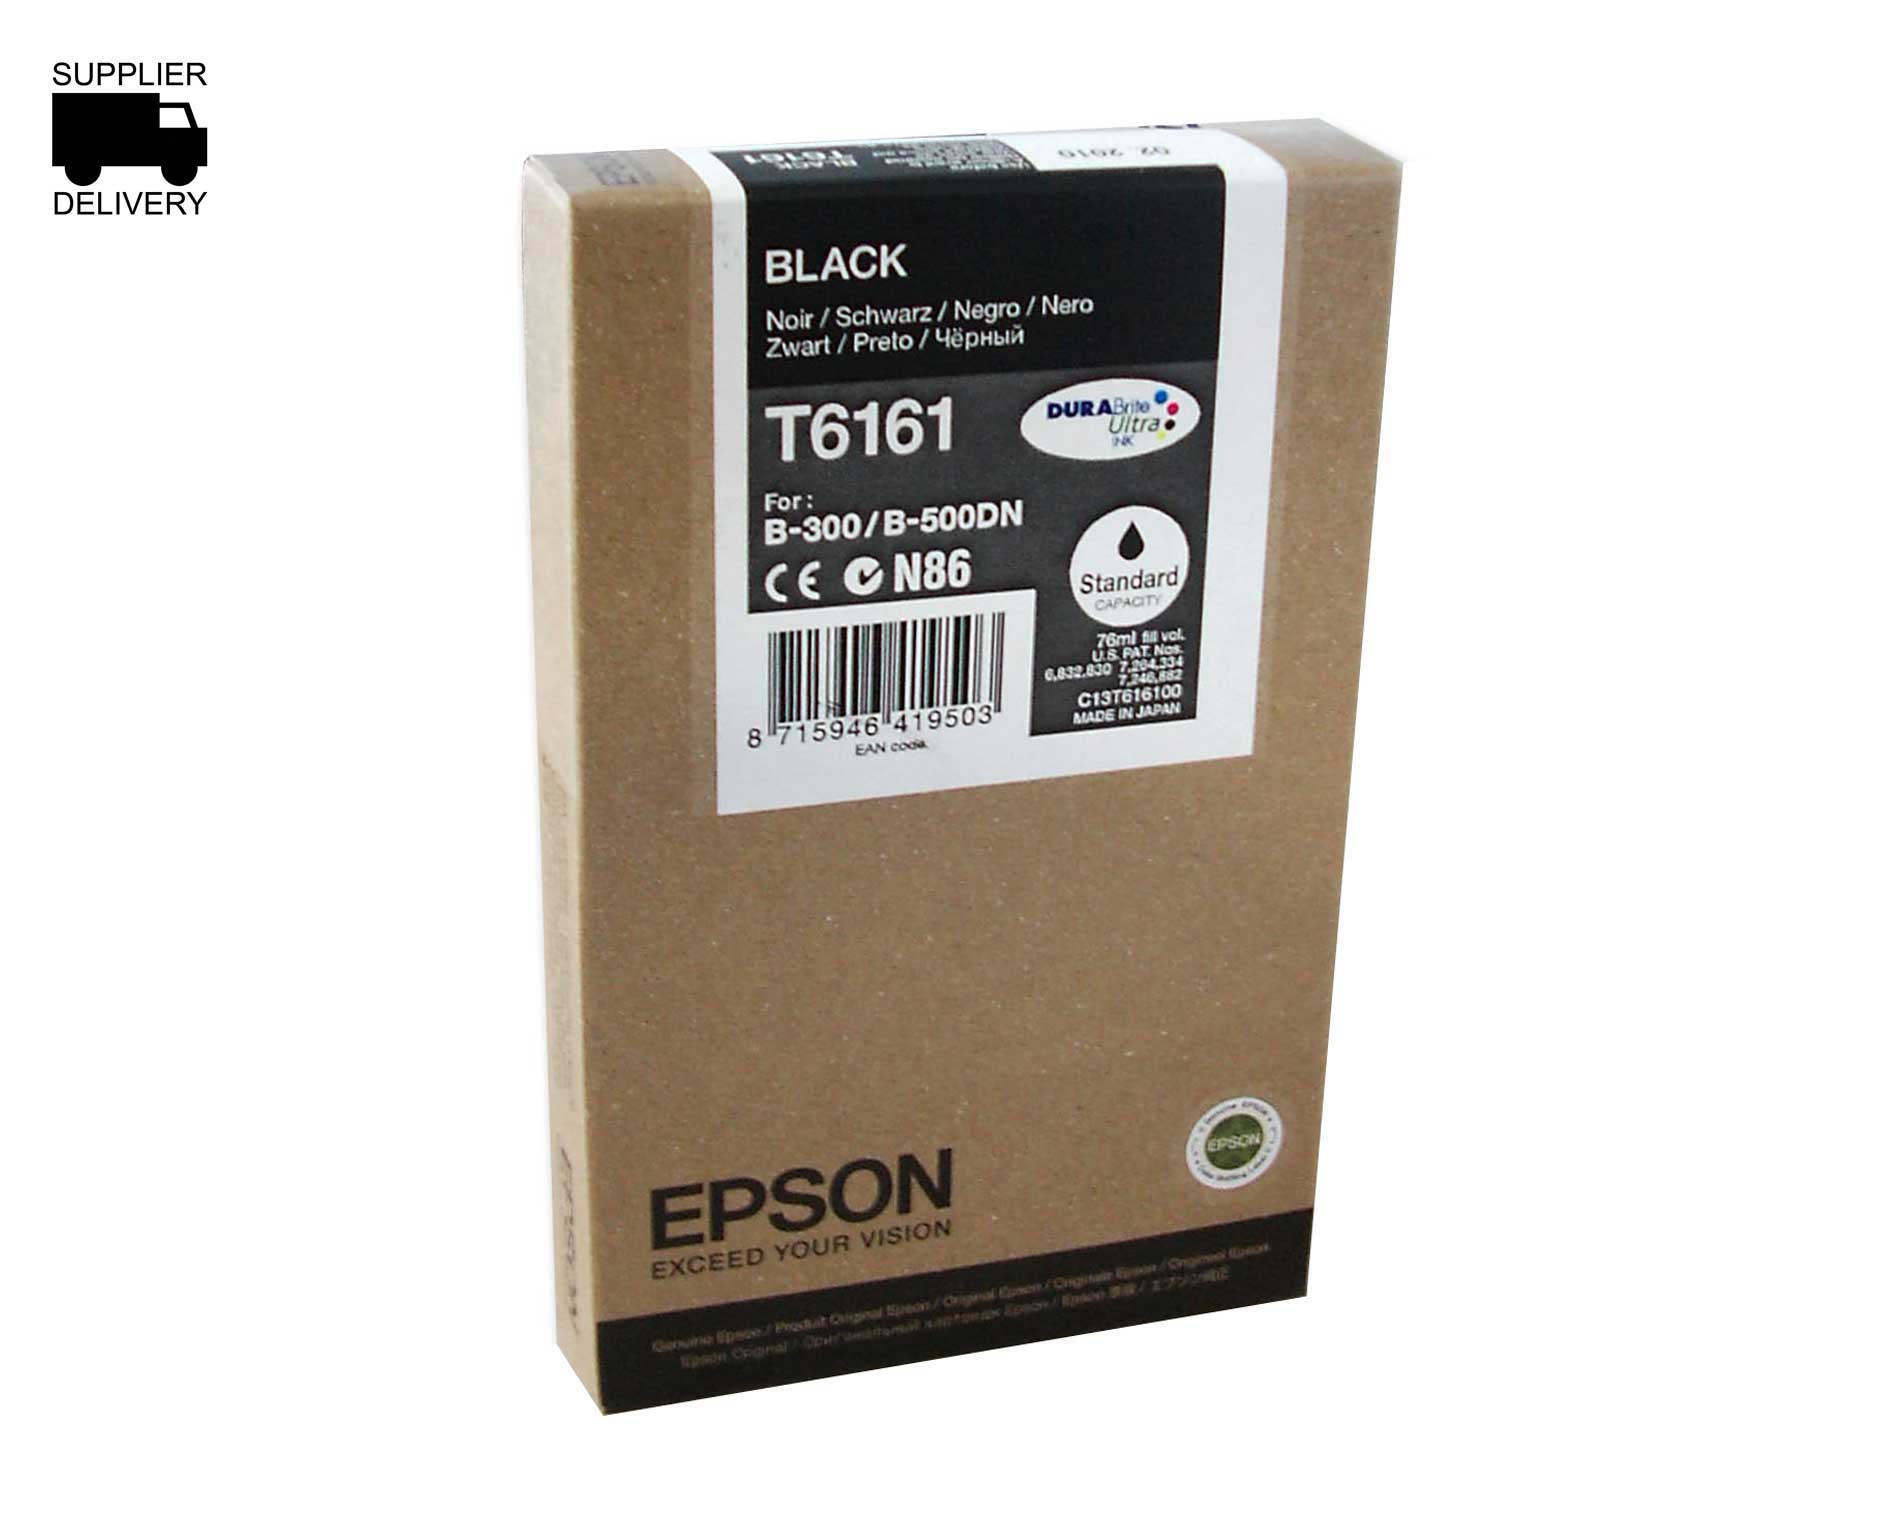 Black Epson T6161 Ink Cartridge (C13T616100) Printer Cartridge